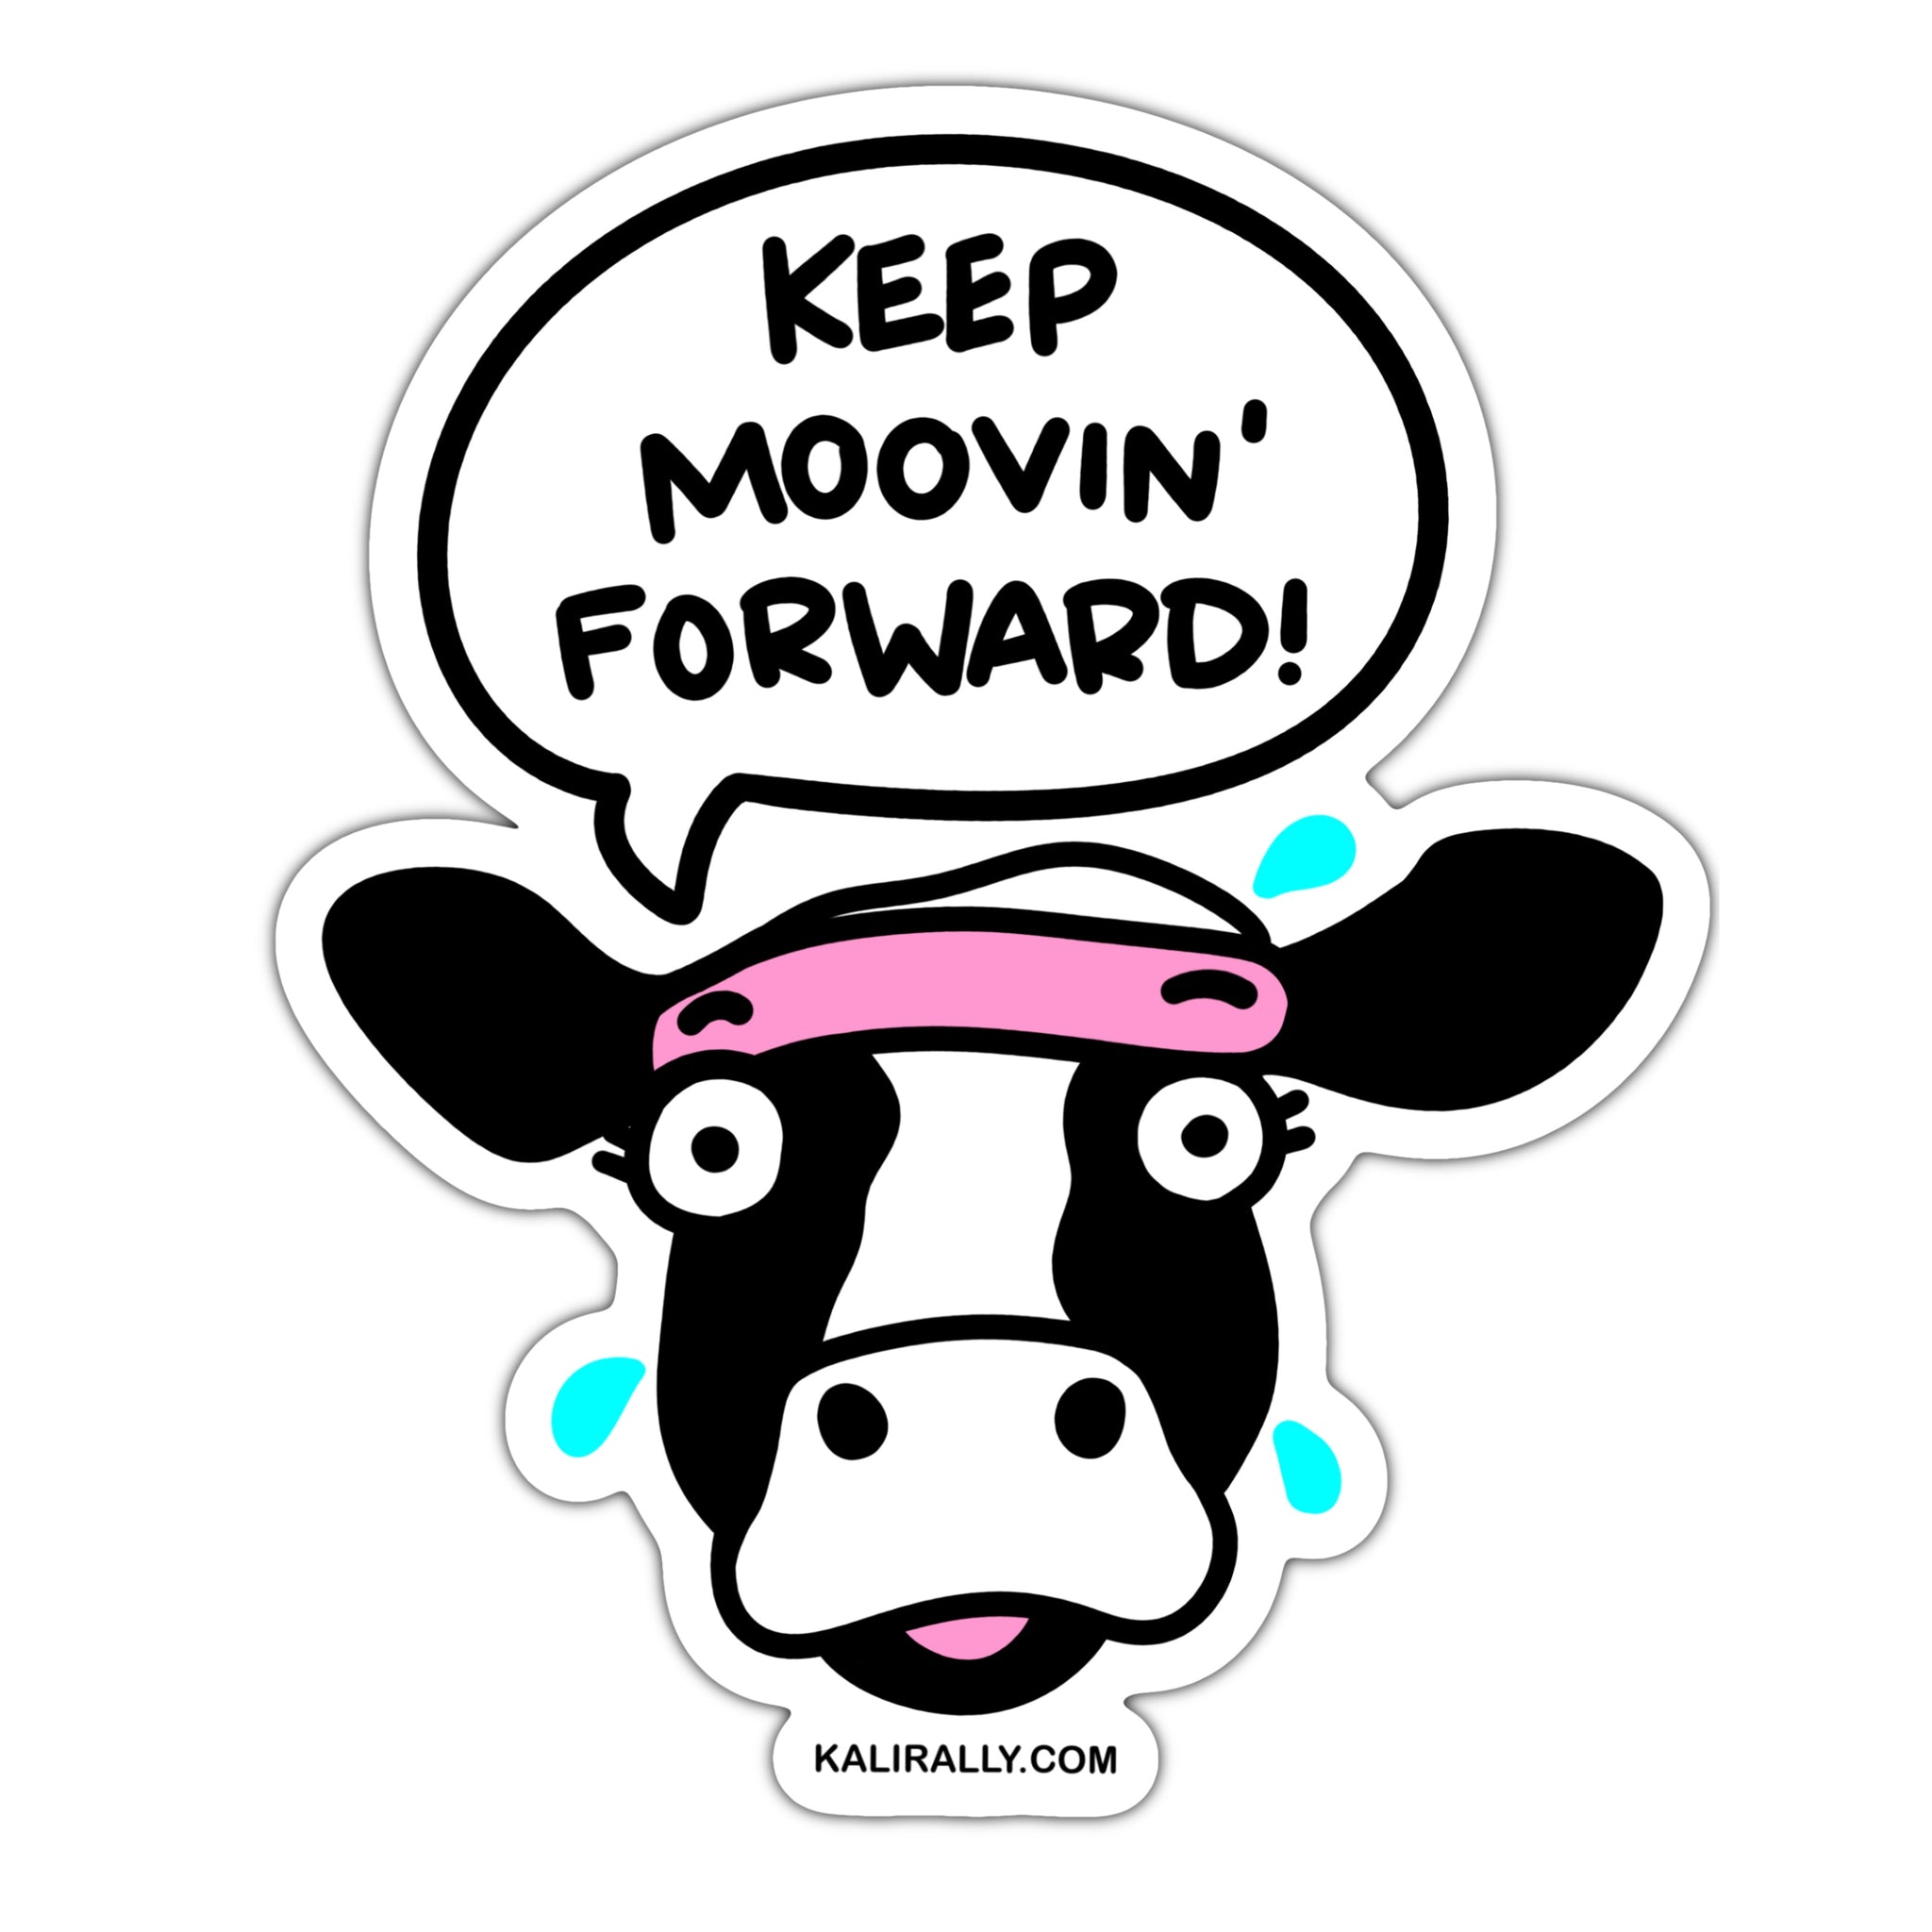 Keep moovin forward sticker, funny running sticker, cute motivational fitness sticker, waterproof sticker